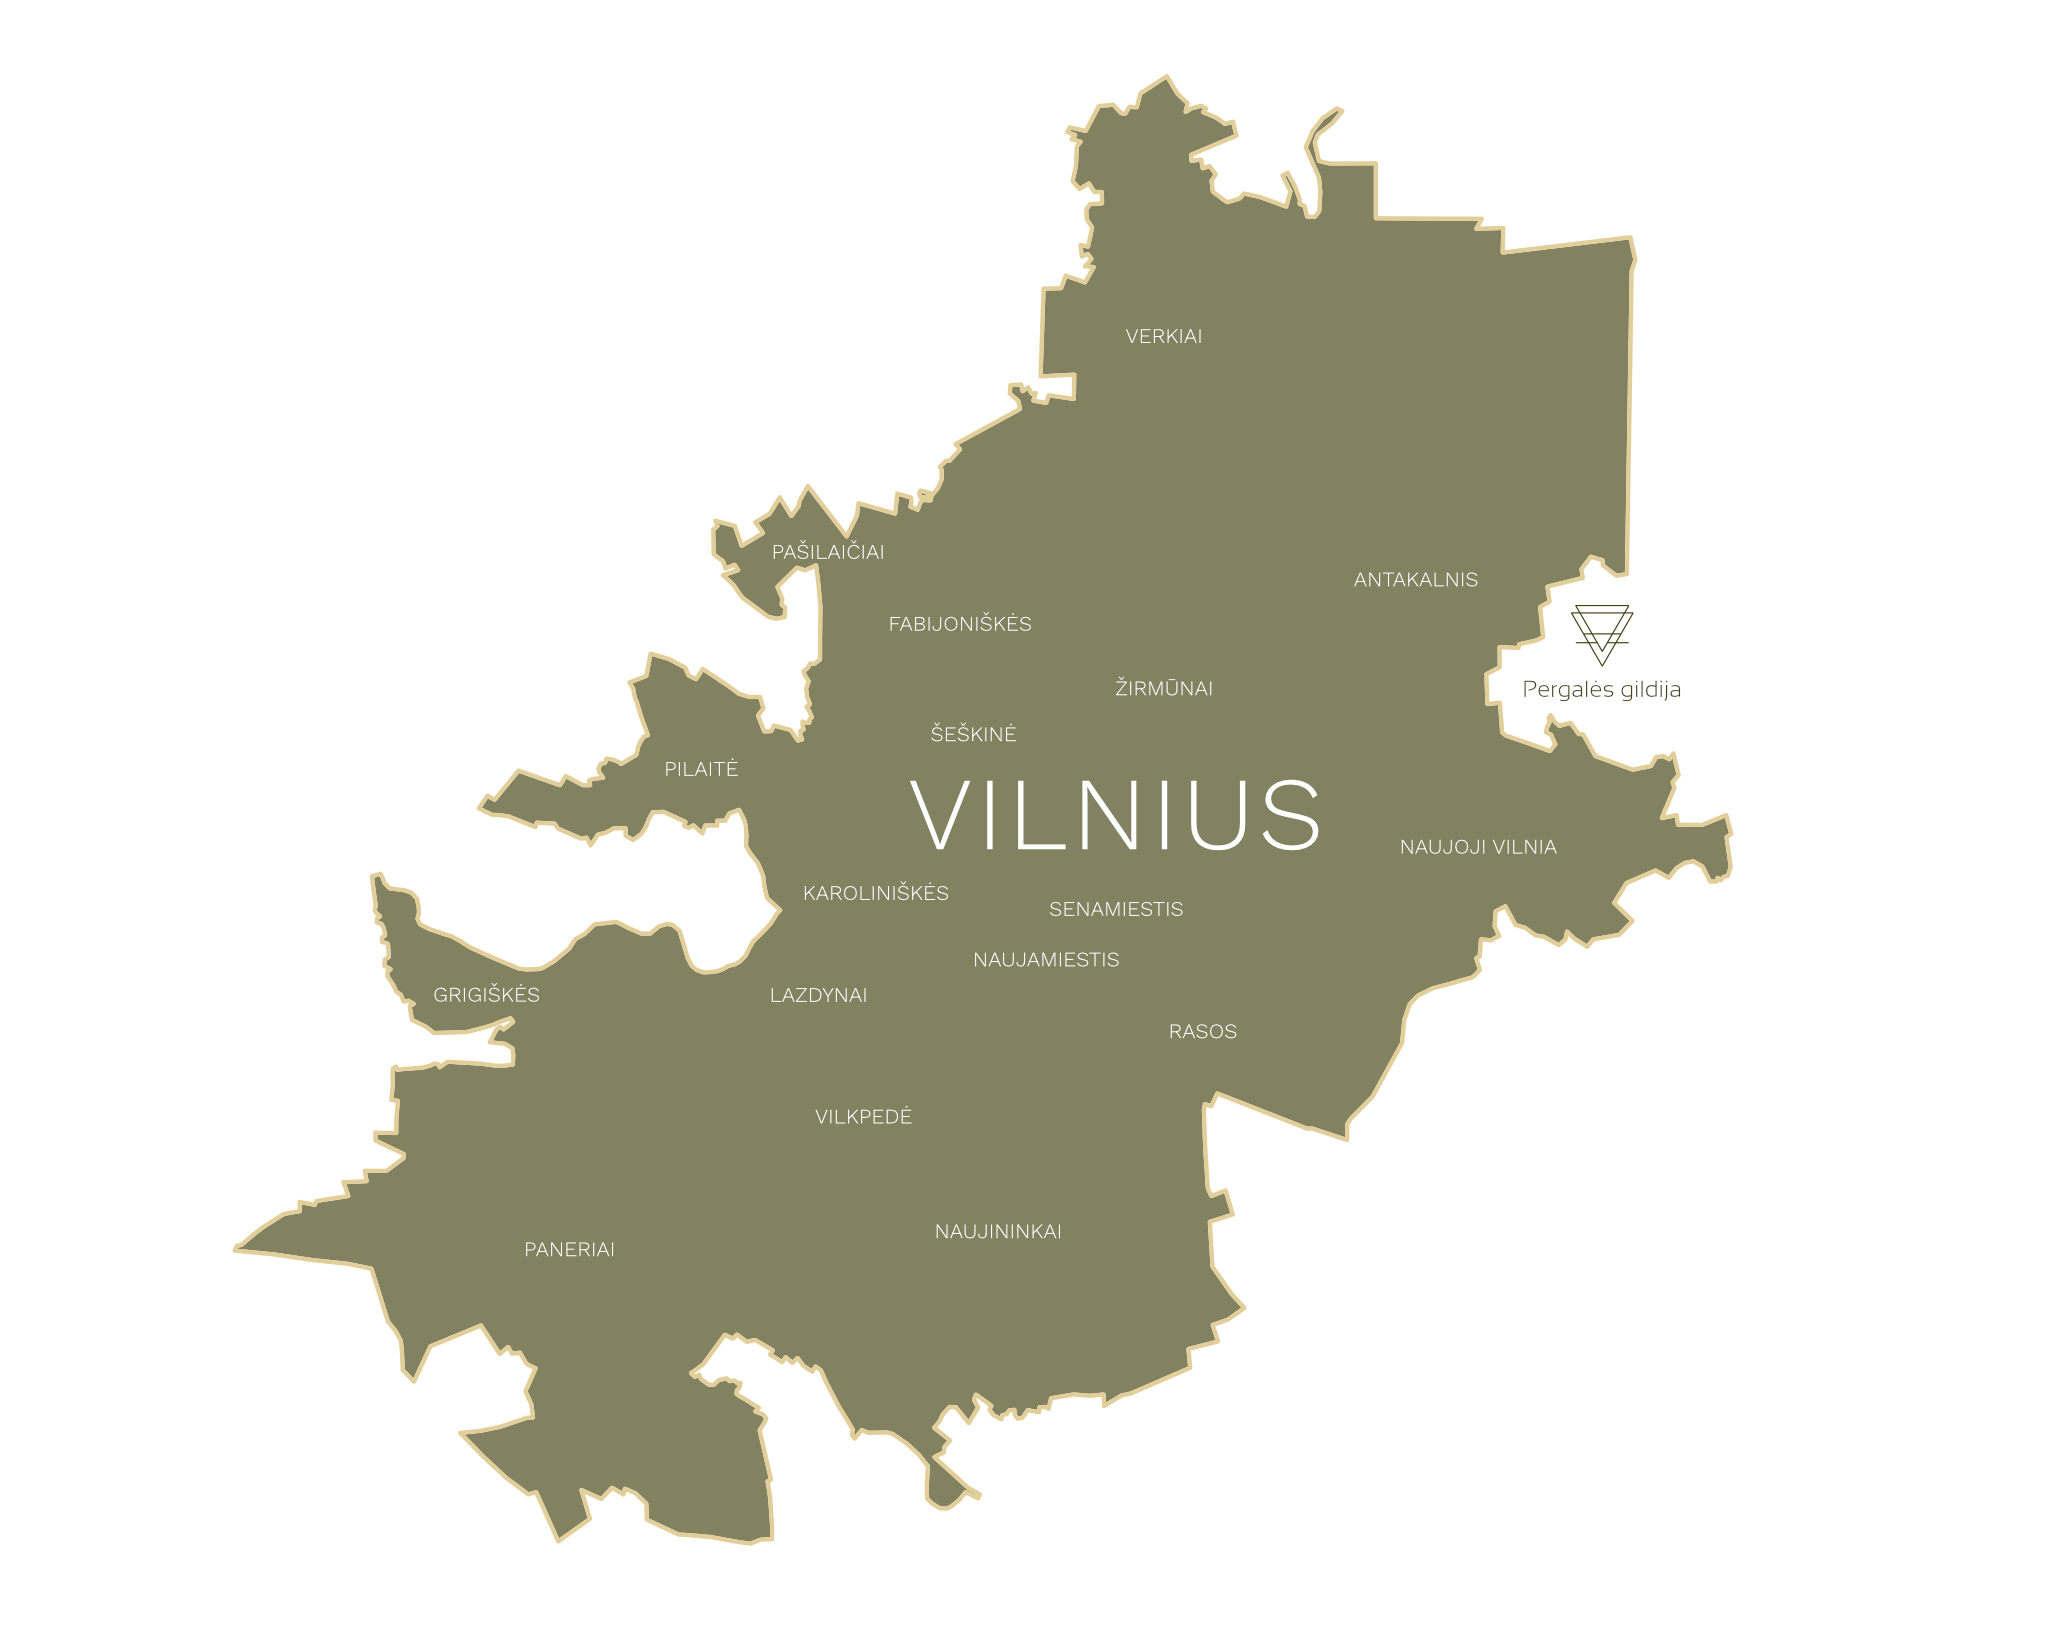 Vilnius city map design